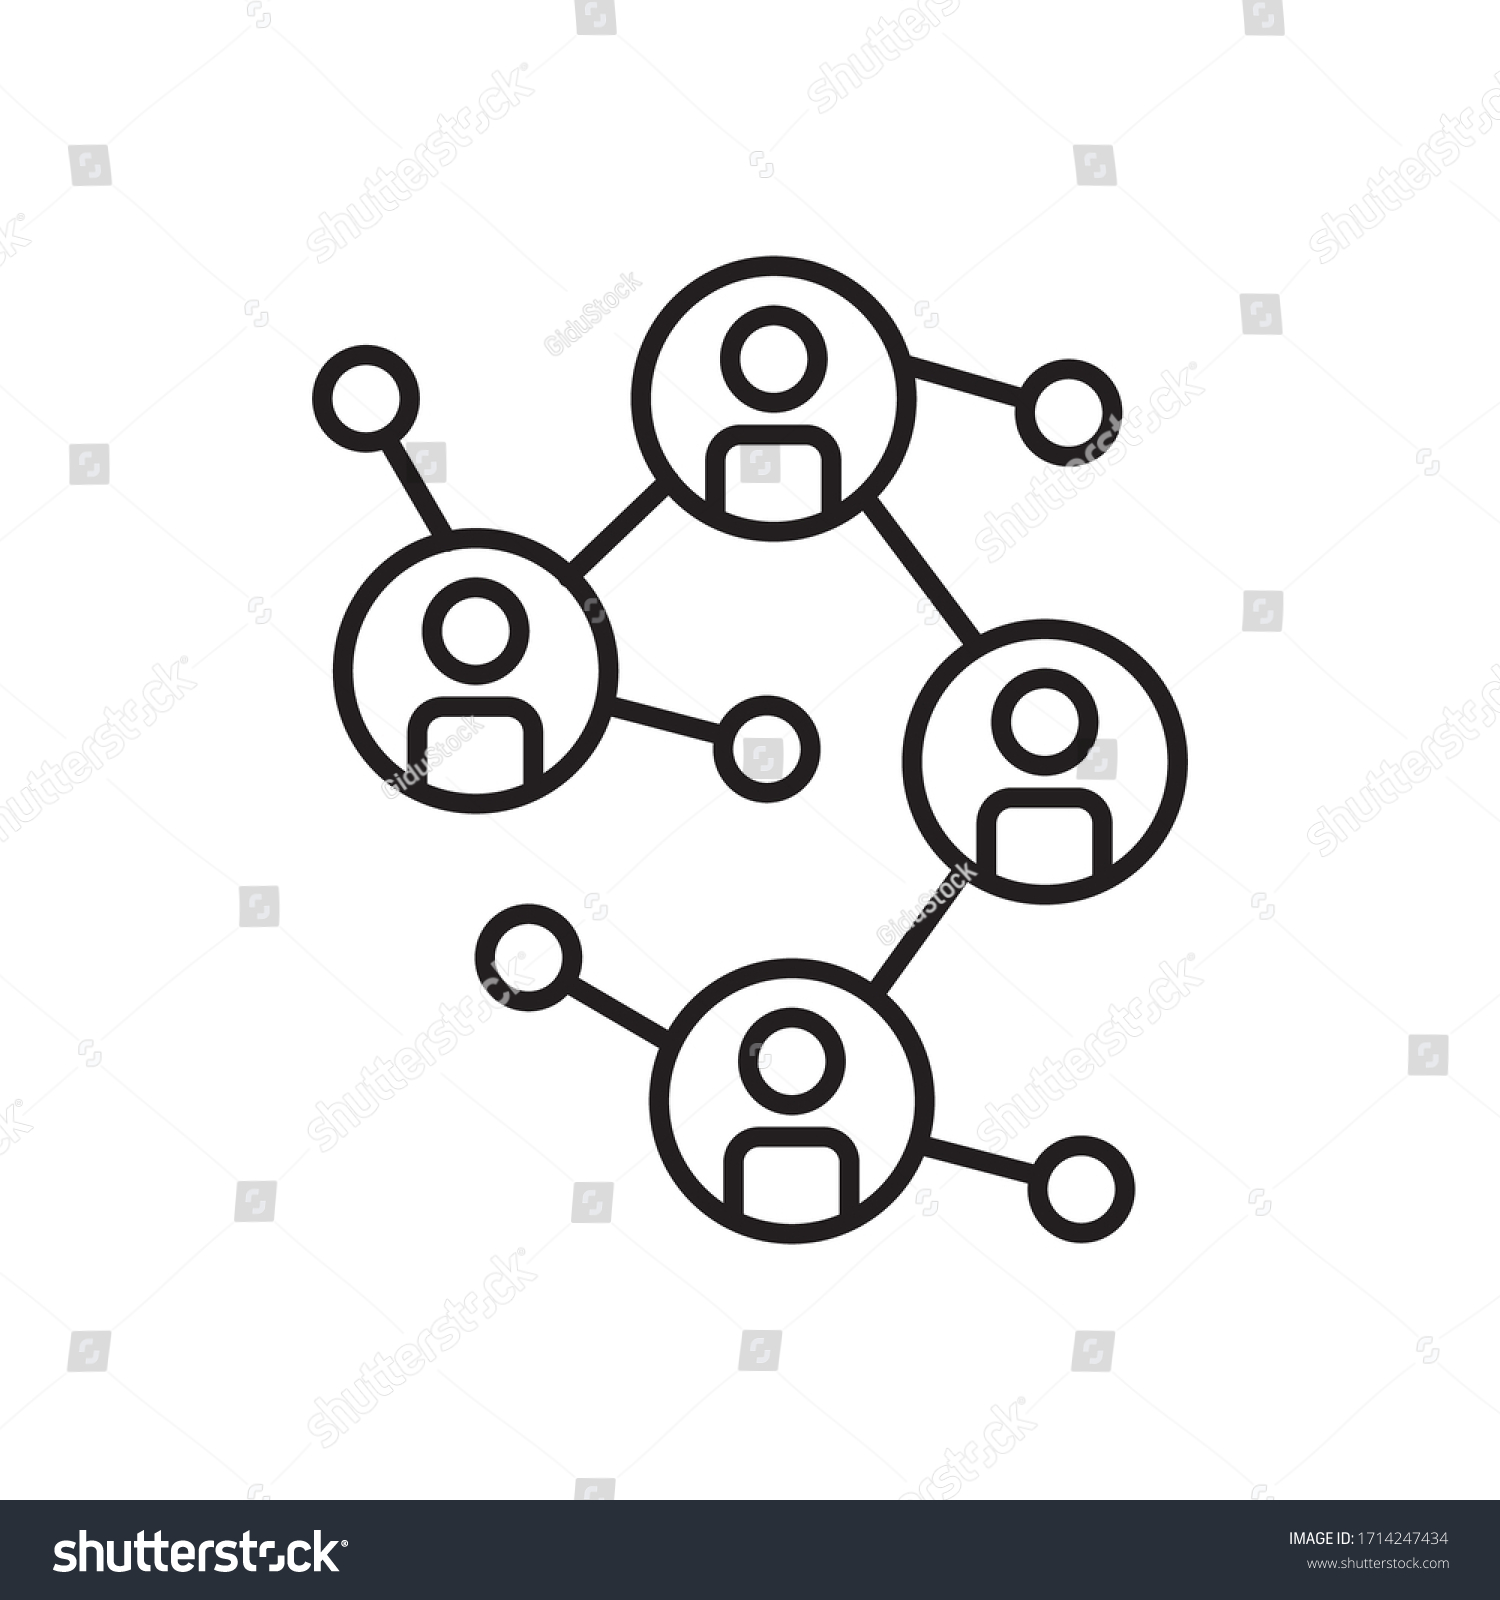 Social network icon, people network illustration. Eps 10 vector illustration. #1714247434